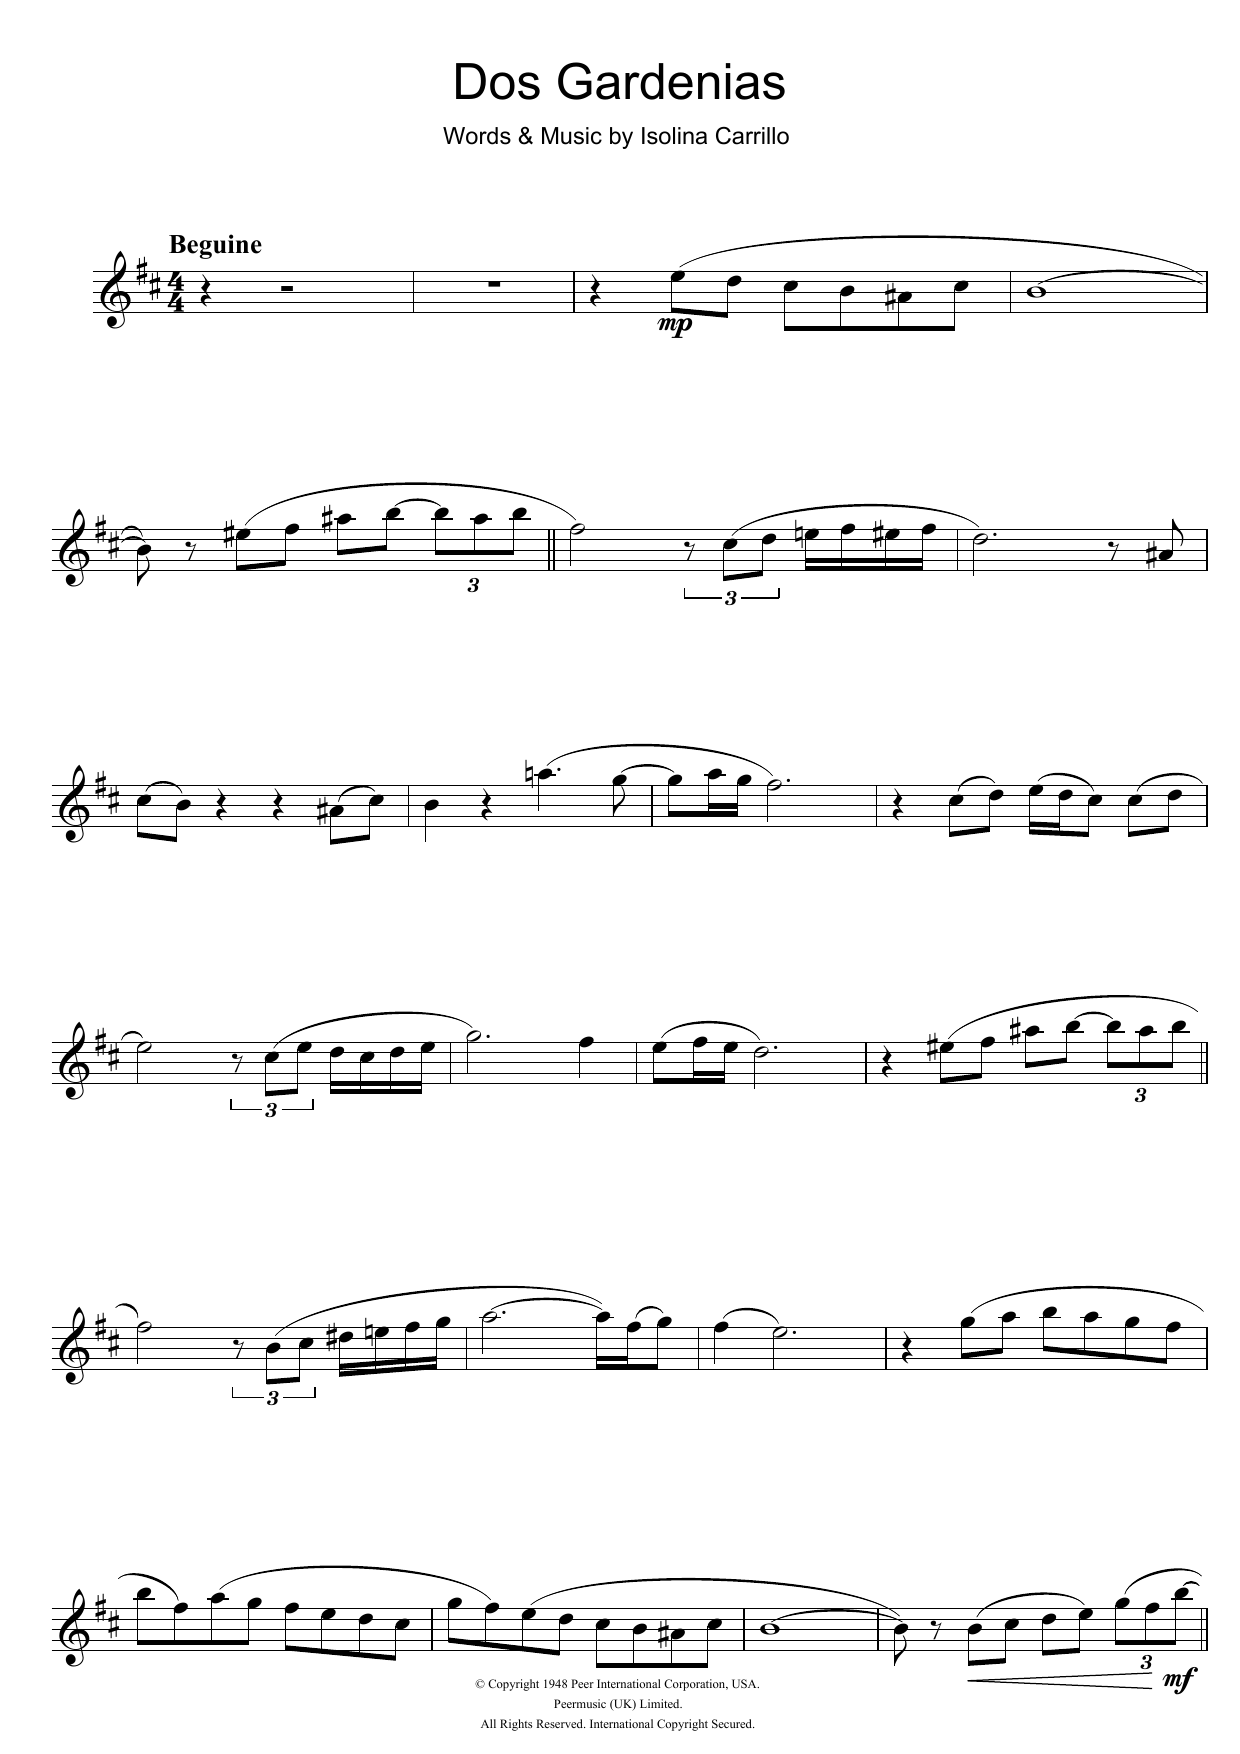 Buena Vista Social Club Dos Gardenias Sheet Music Notes & Chords for Trumpet - Download or Print PDF